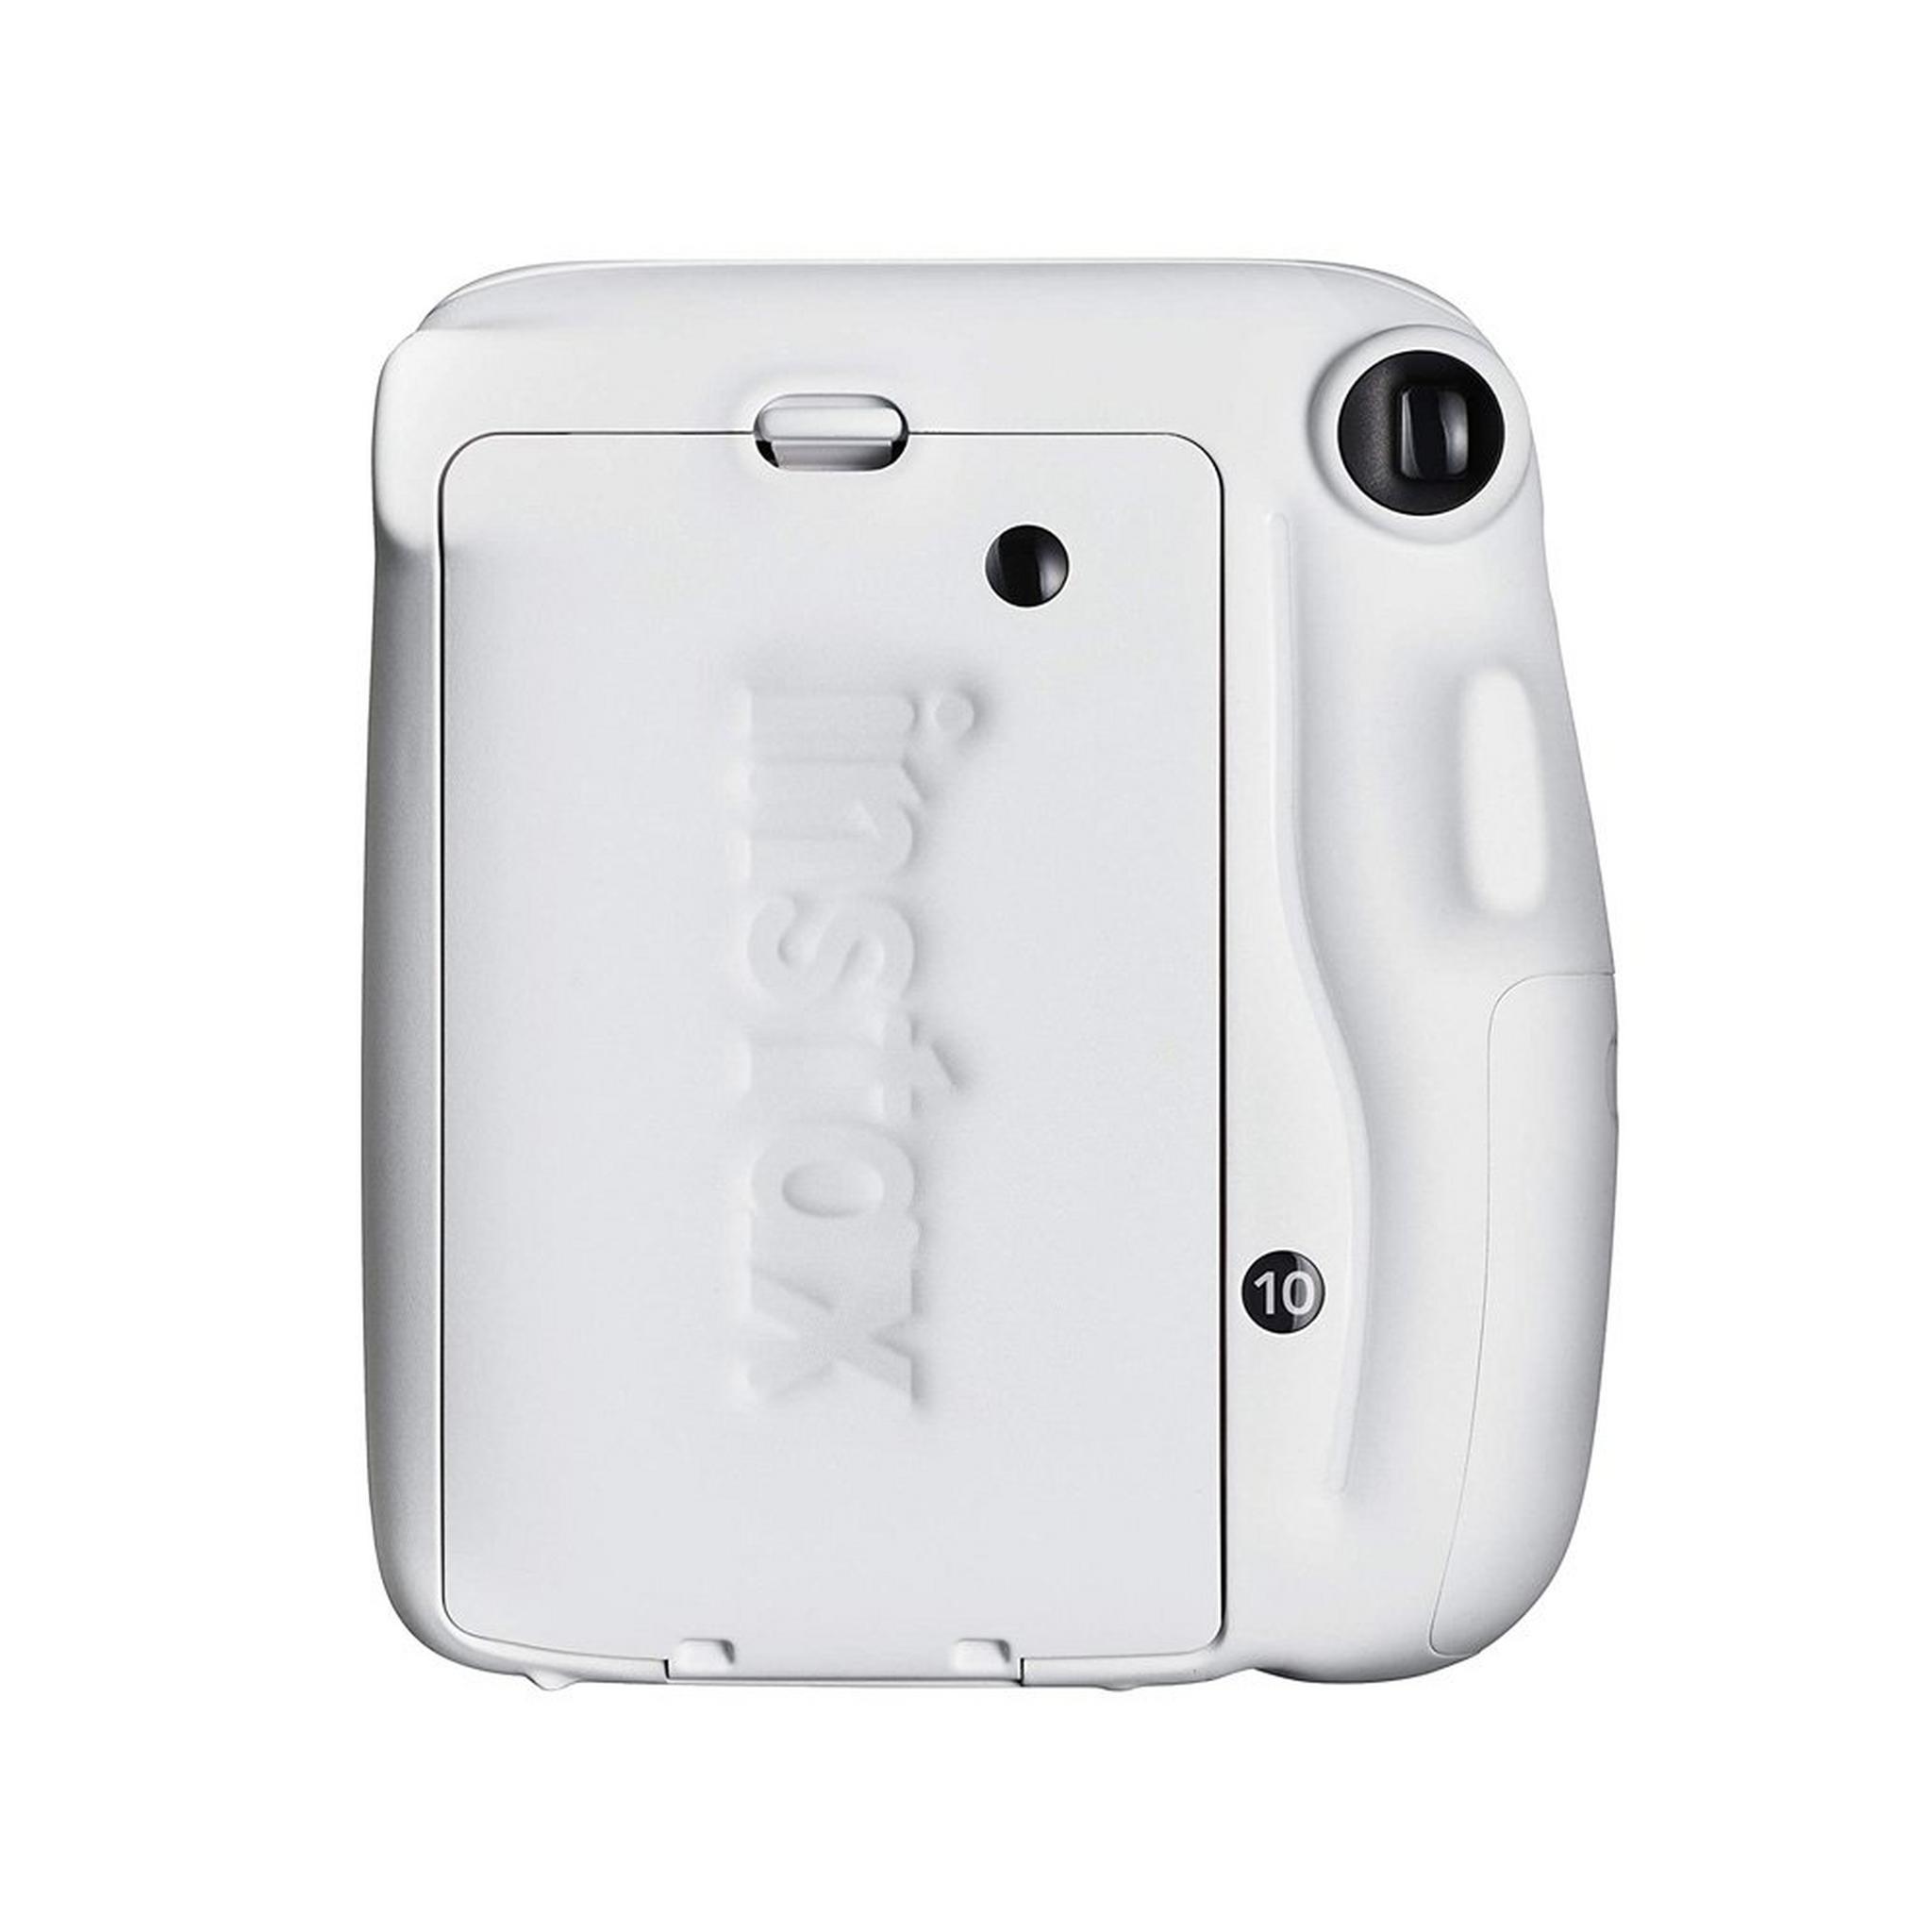 Fujifilm Instax Mini 11 Instant Film Camera with Accessories Bundle - White